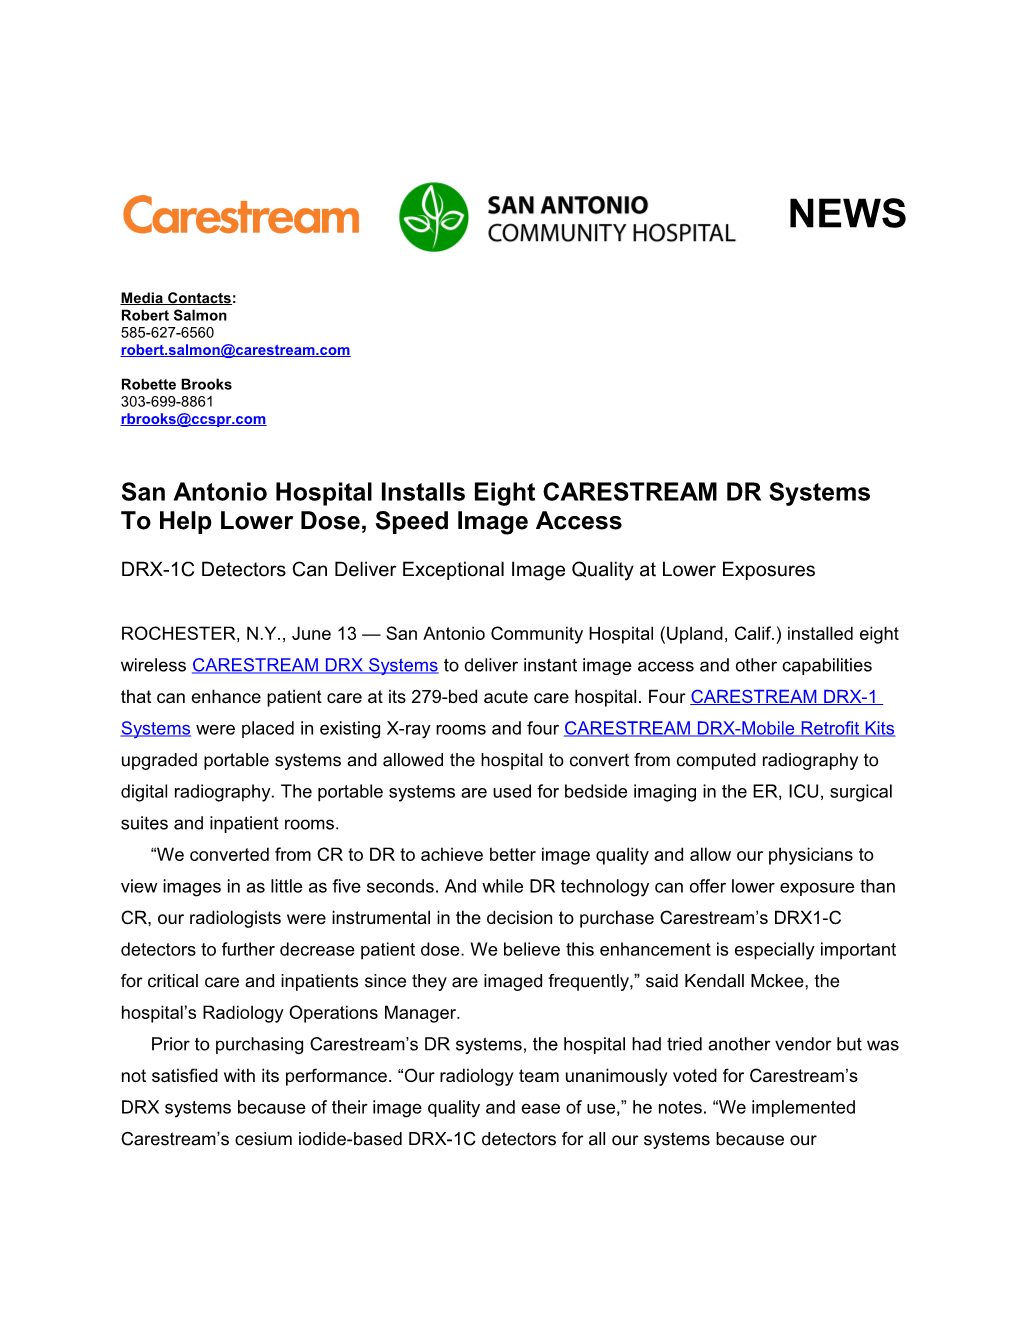 San Antoniocommunityhospital Installs Eight CARESTREAM DR Systems to Help Lower Dose